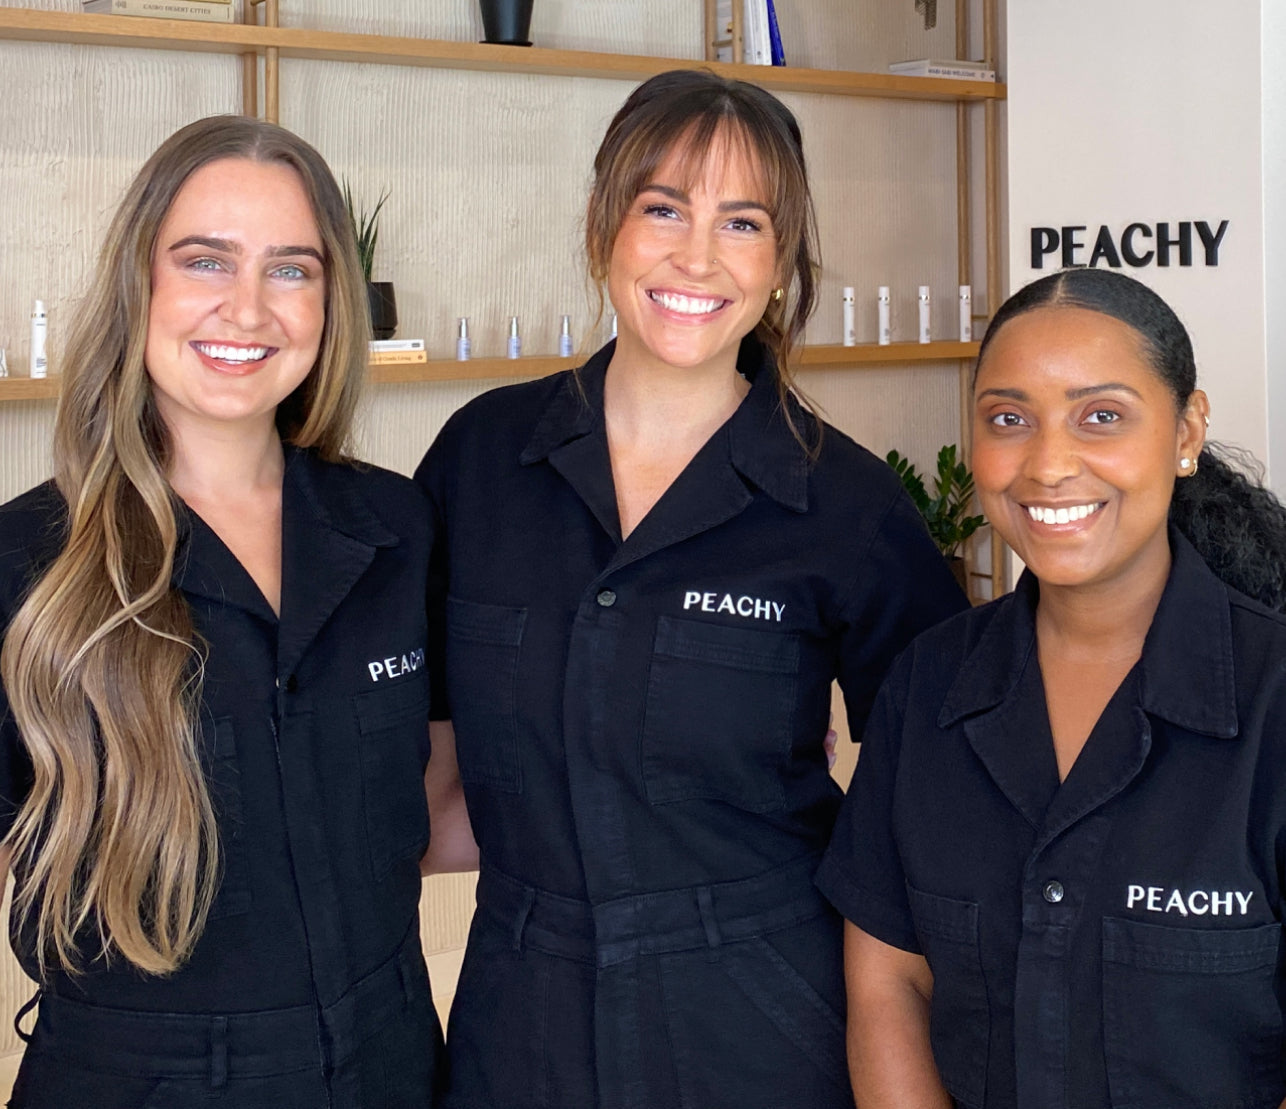 Three smiling Peachy providers